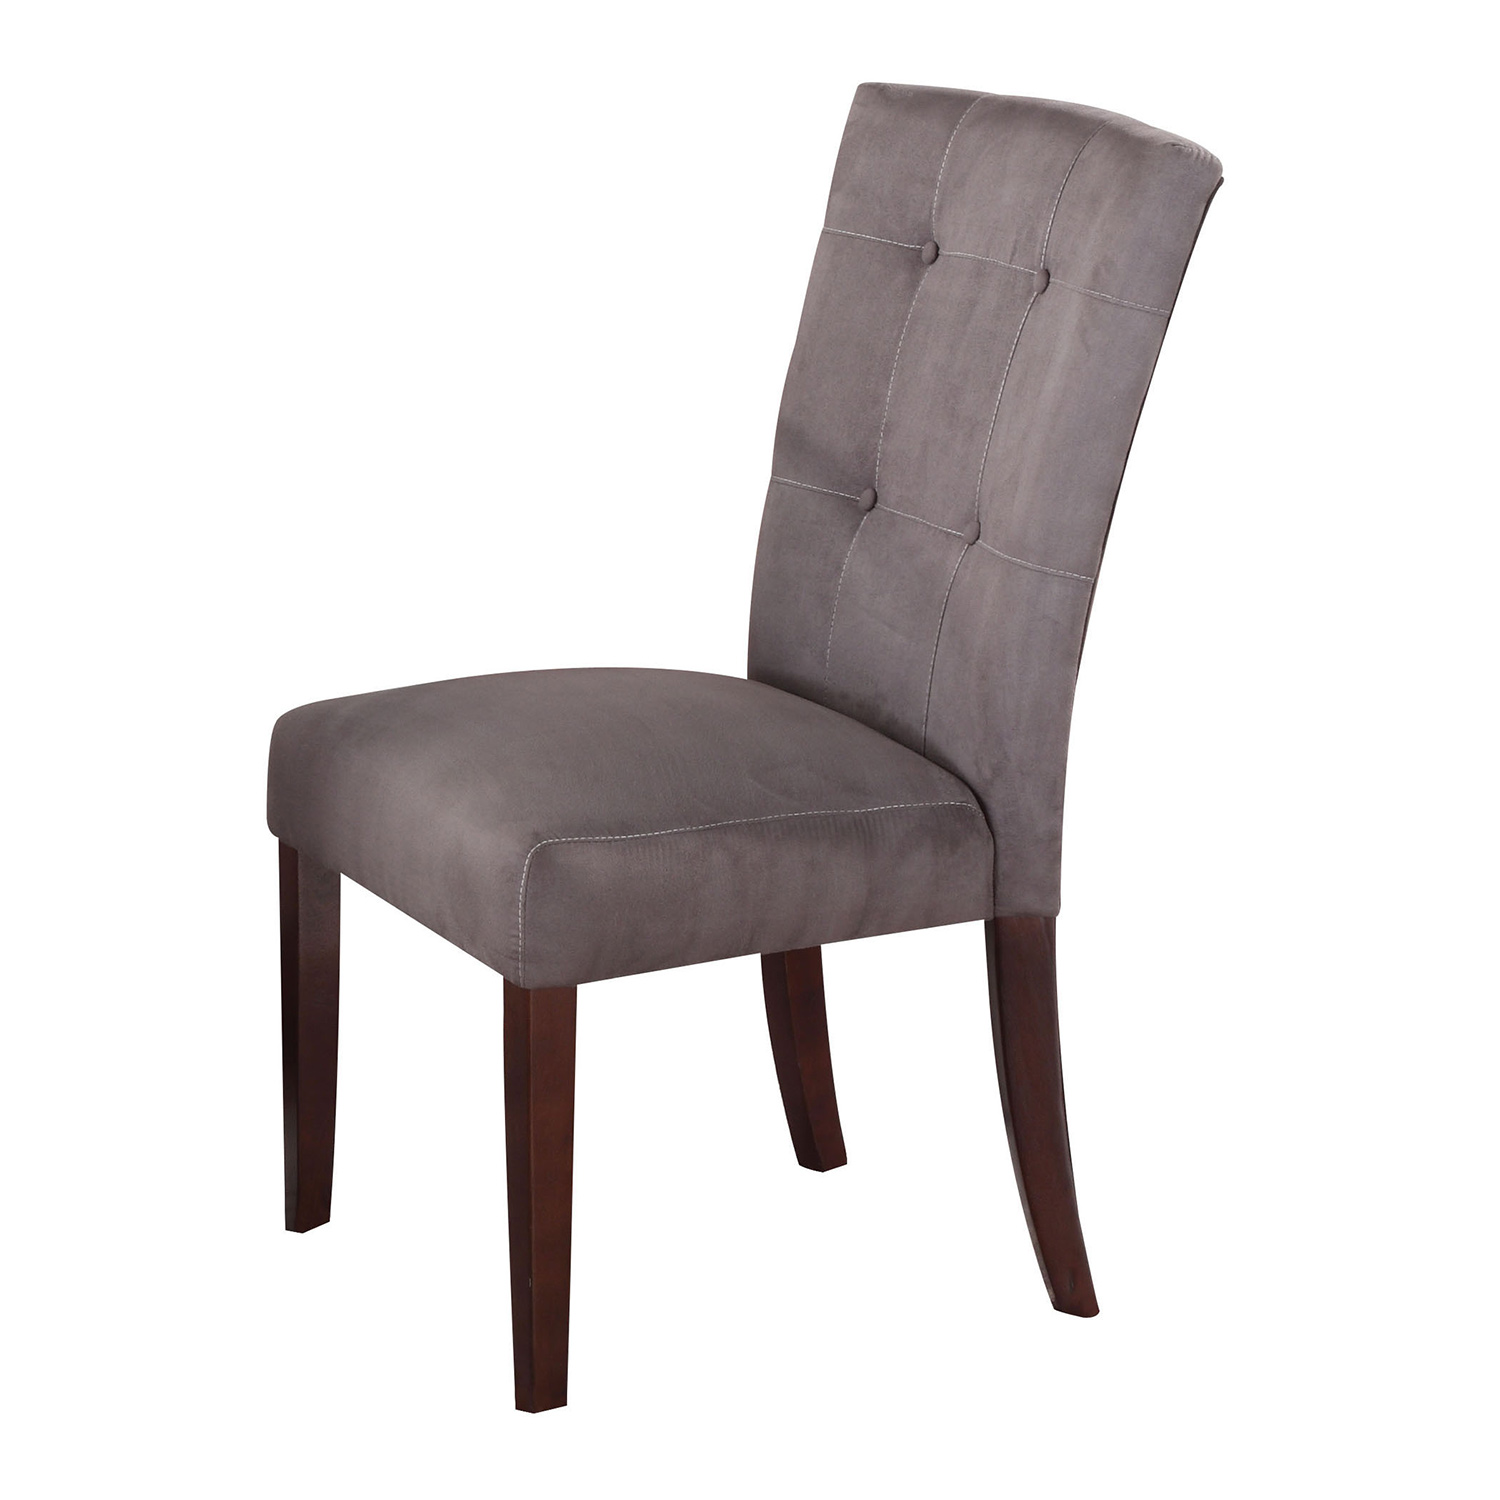 Acme Baldwin Side Chair - Gray/Walnut